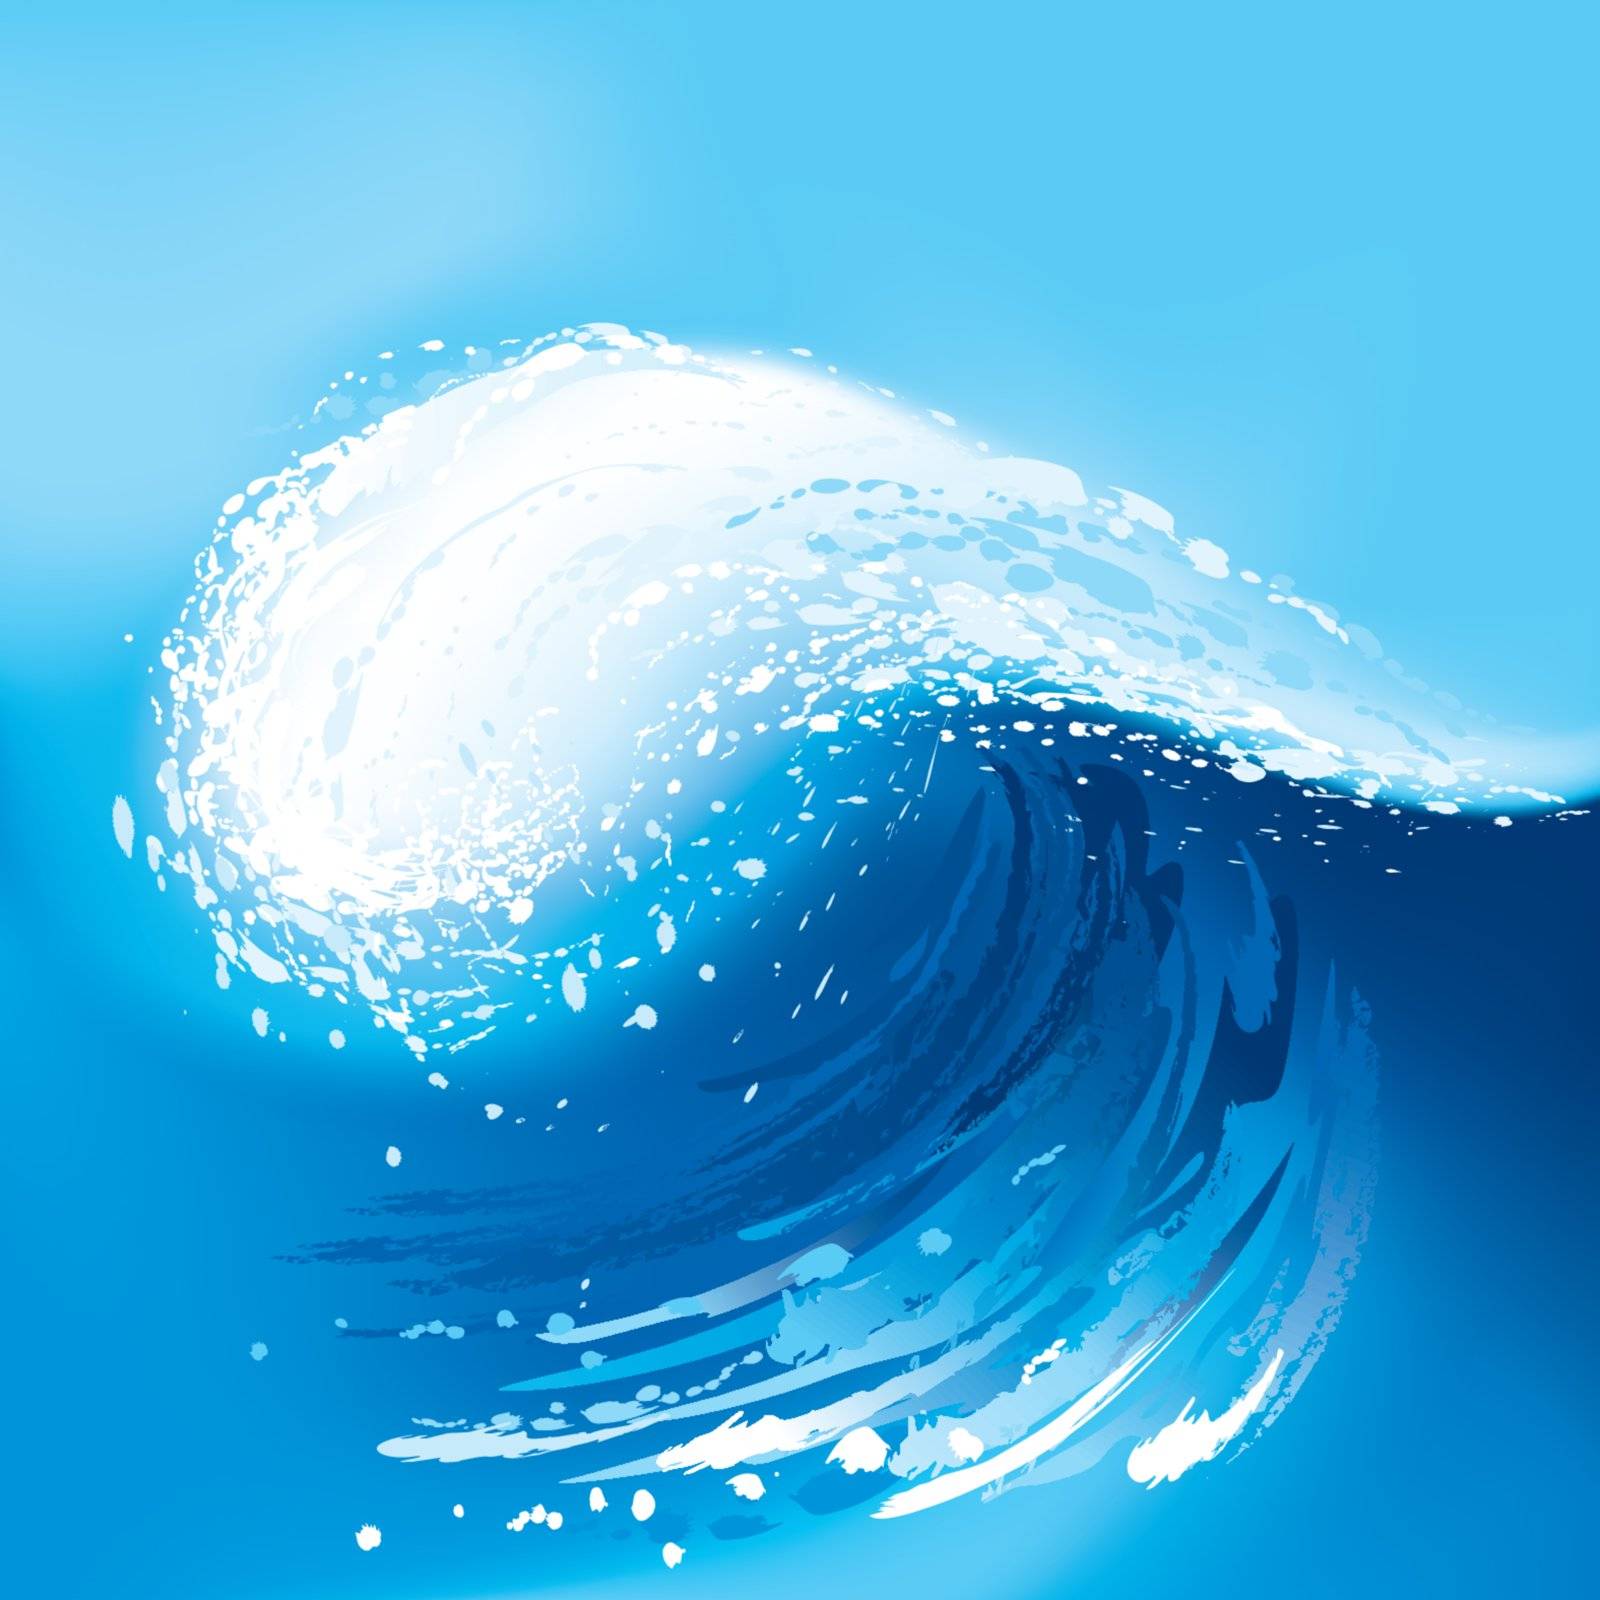 Big Blue Wave, editable vector illustration